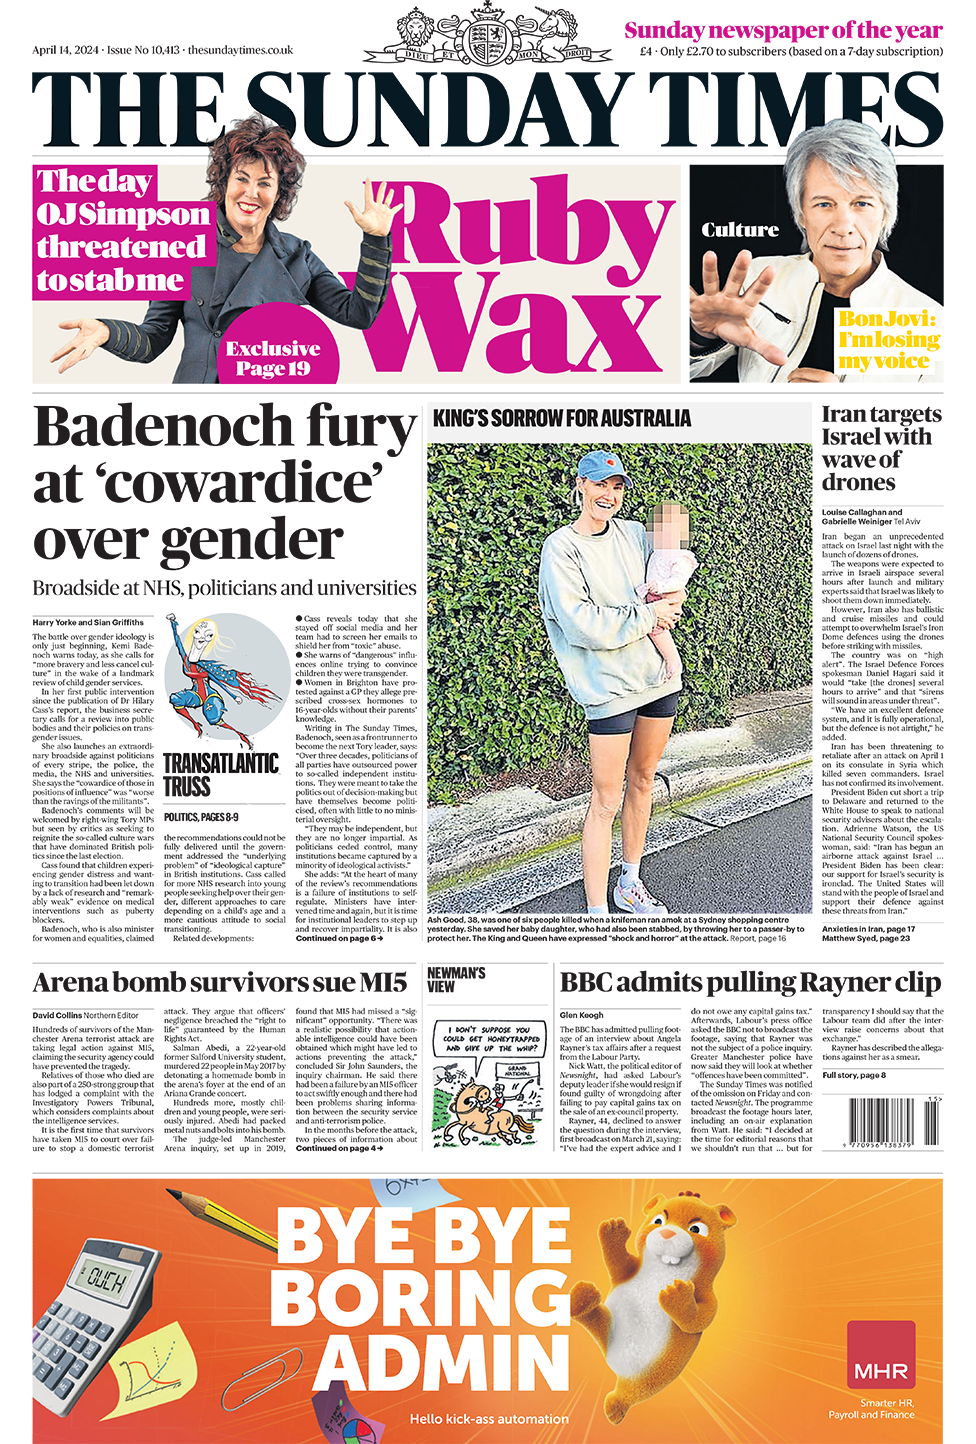 The Sunday Times headline: "Badenoch fury at 'cowardice' over gender"